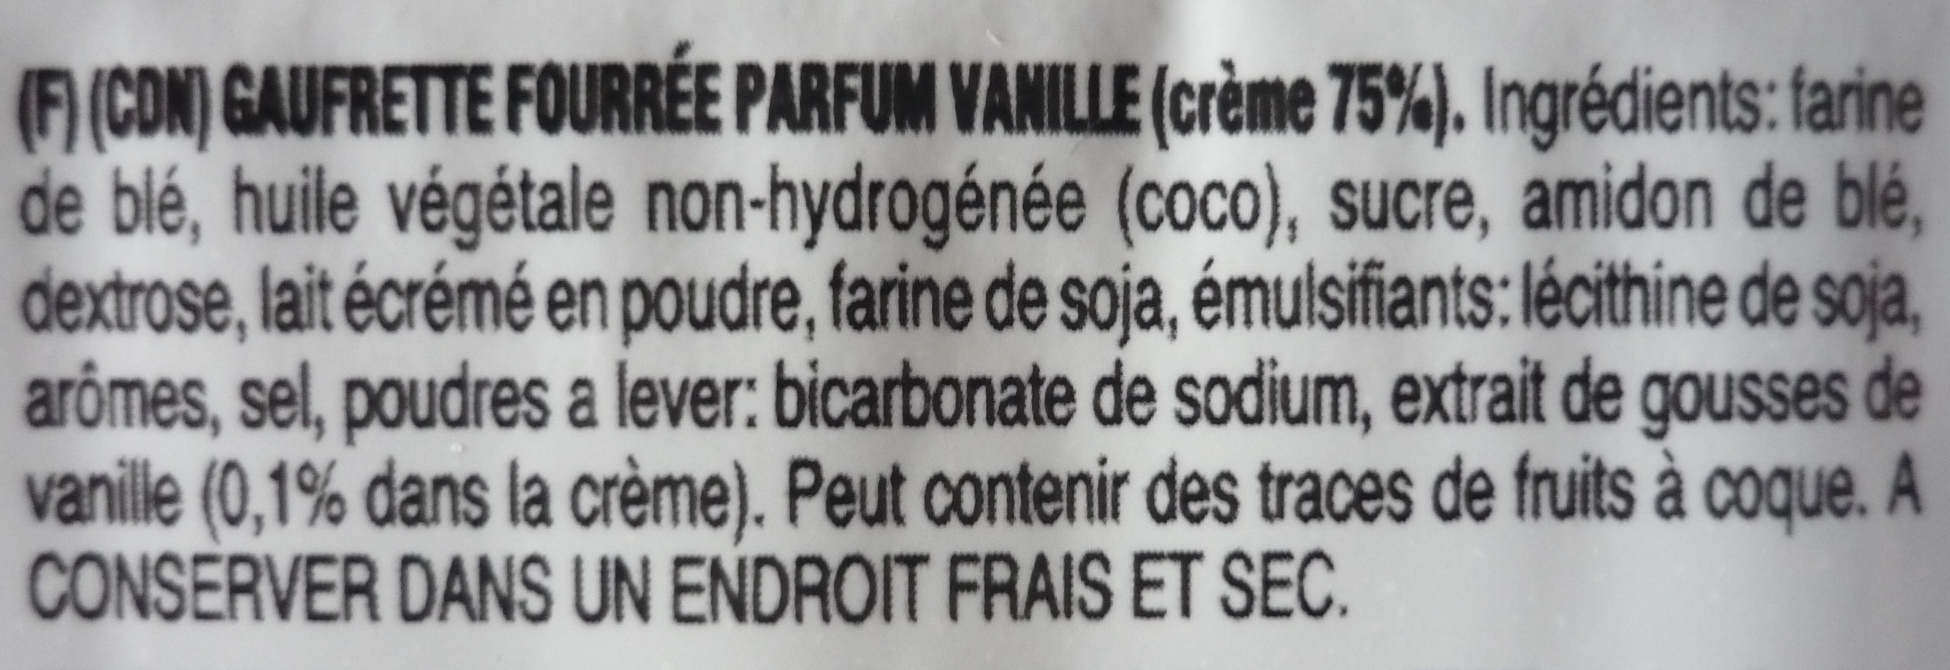 Wafers alla vaniglia - Ingredients - fr